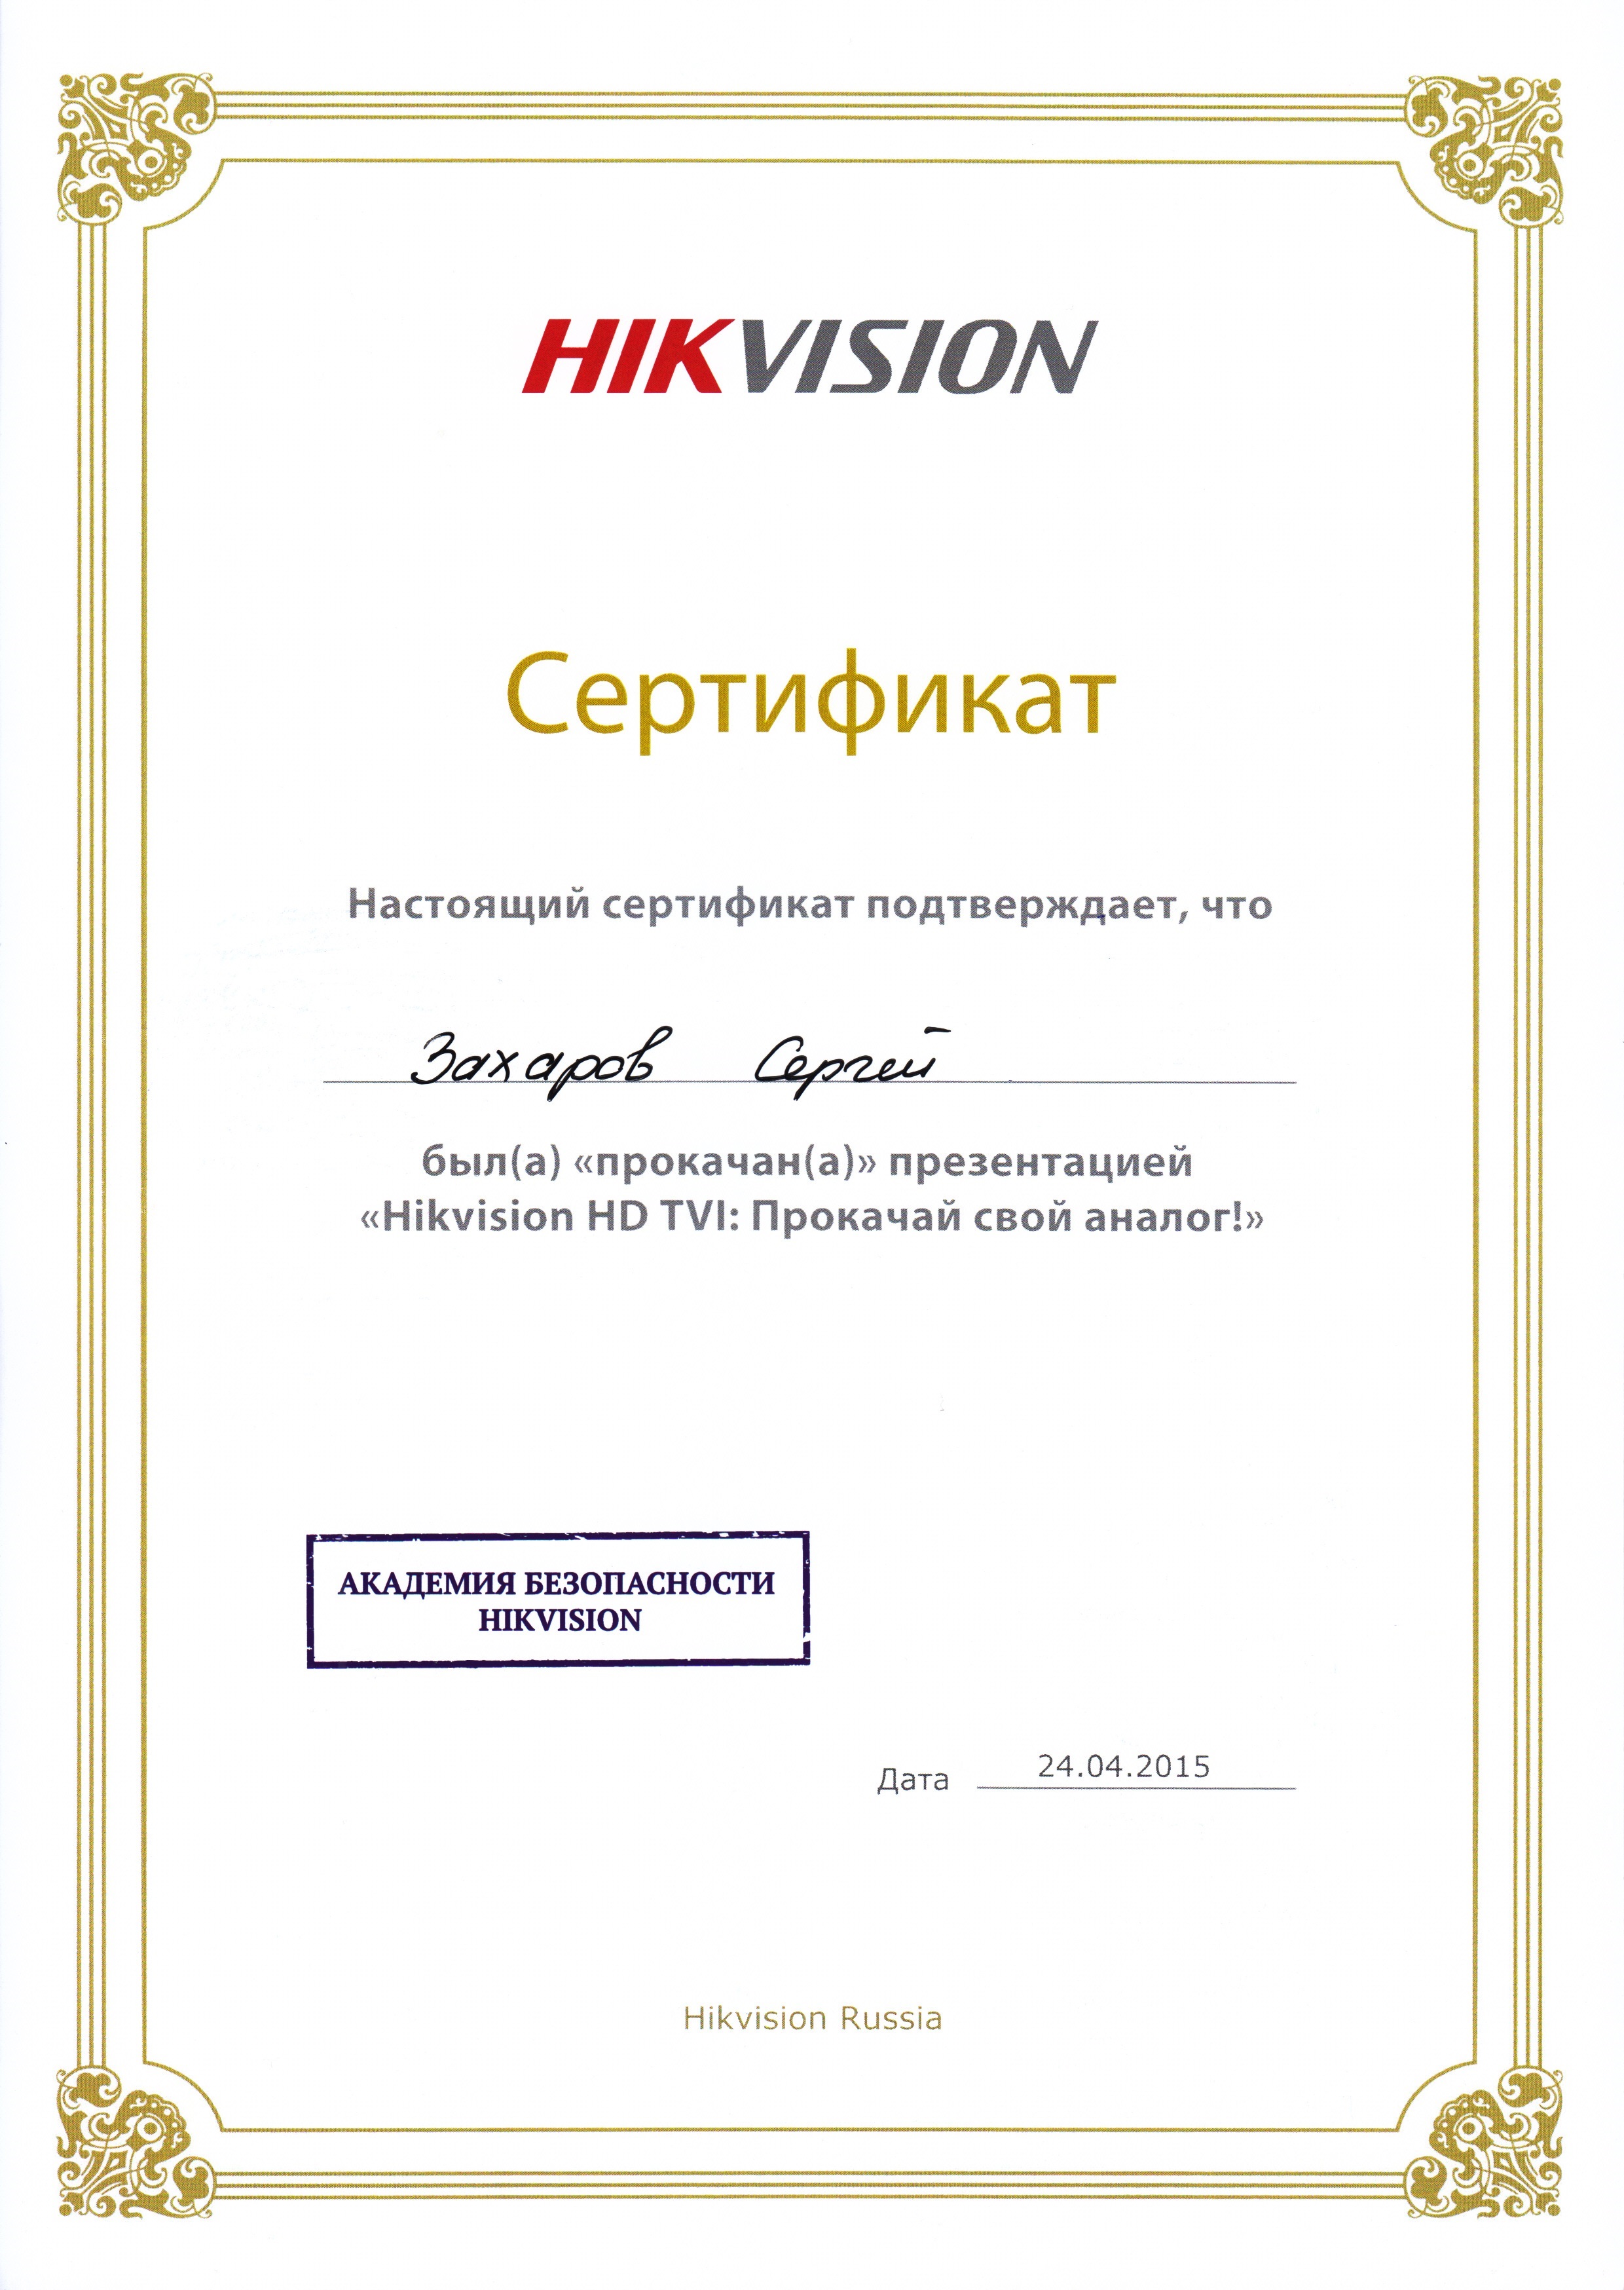 Сертификат Hikvision